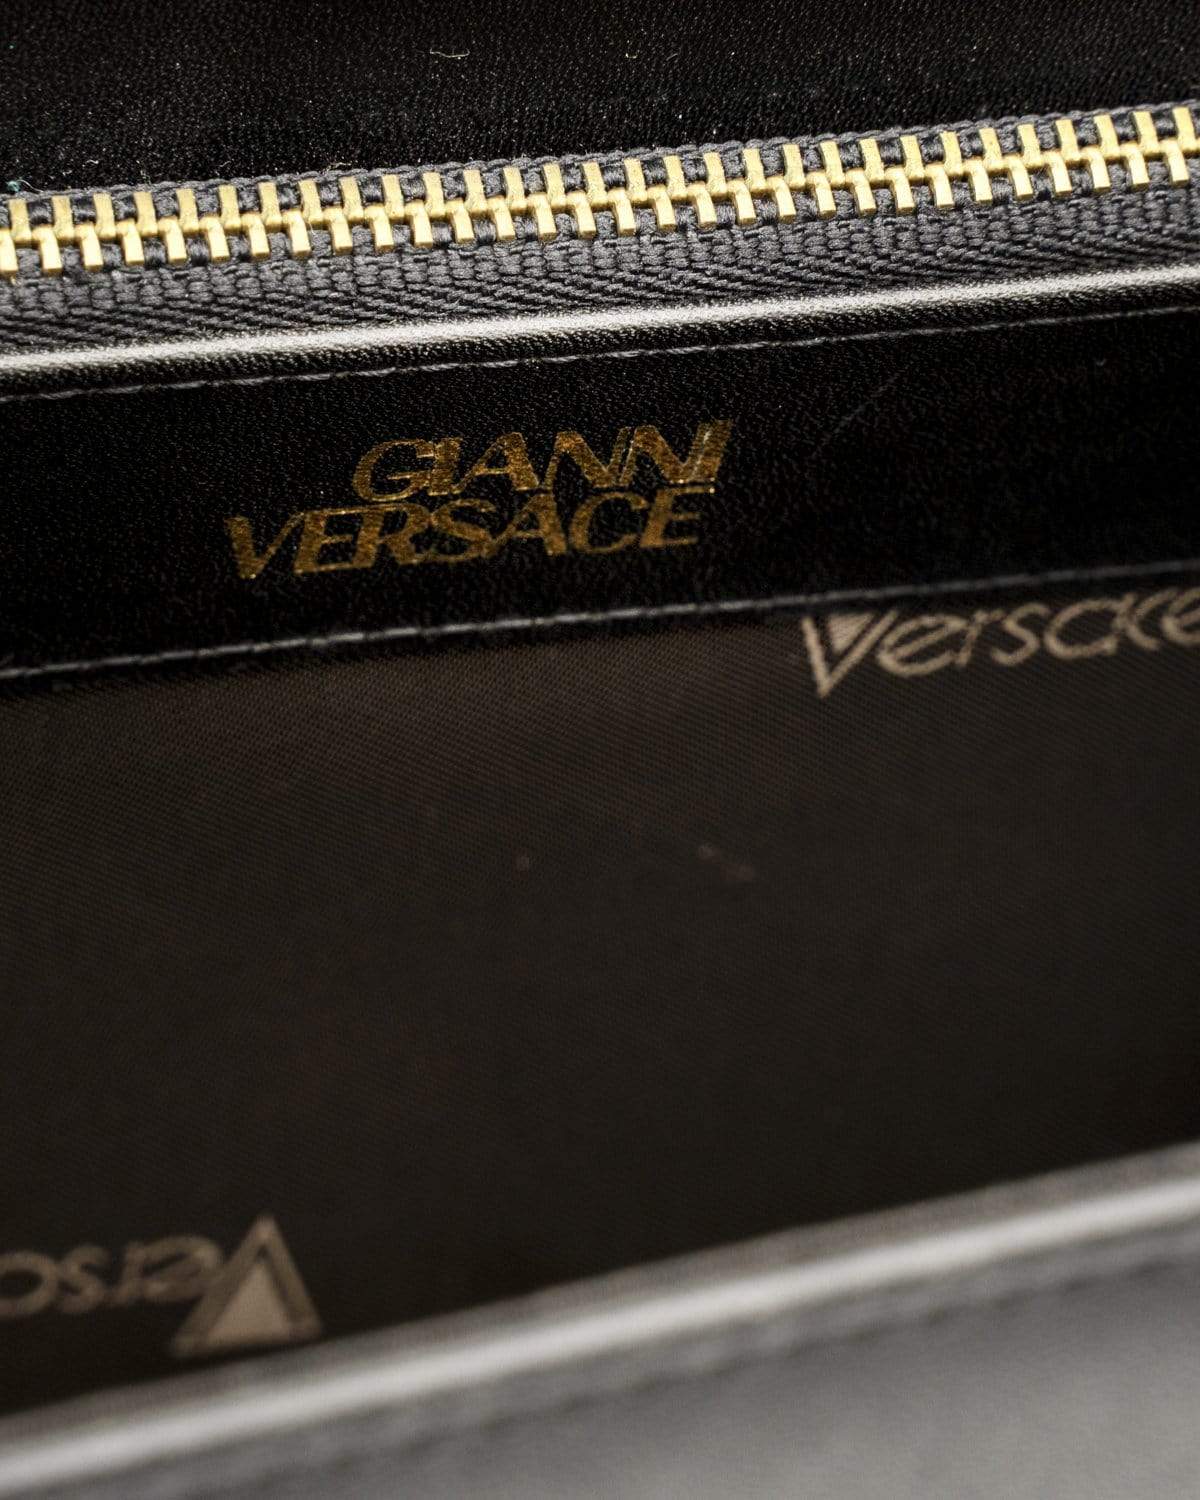 Versace Vintage Gianni Versace classic black handbag with golden buckle motif and a shoulder strap - AWC1093